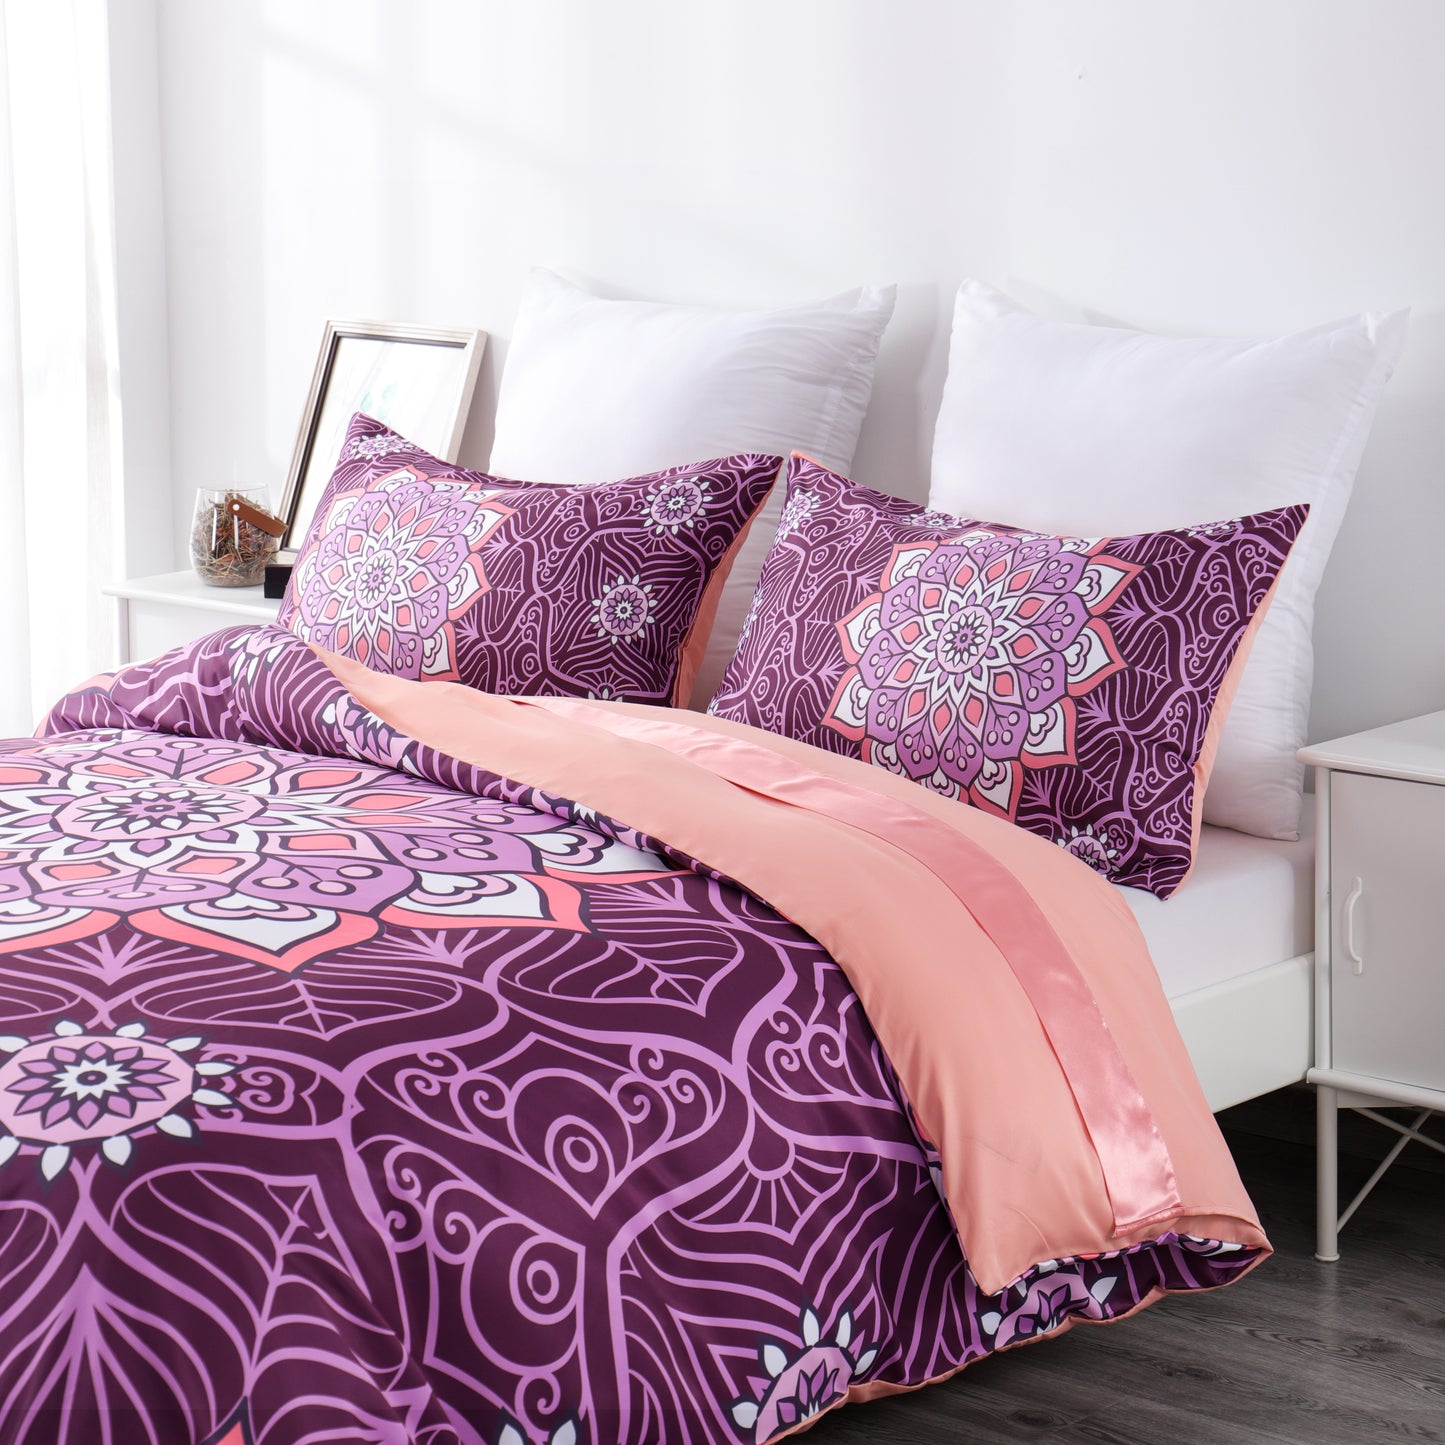 Duvet cover luxury-purple